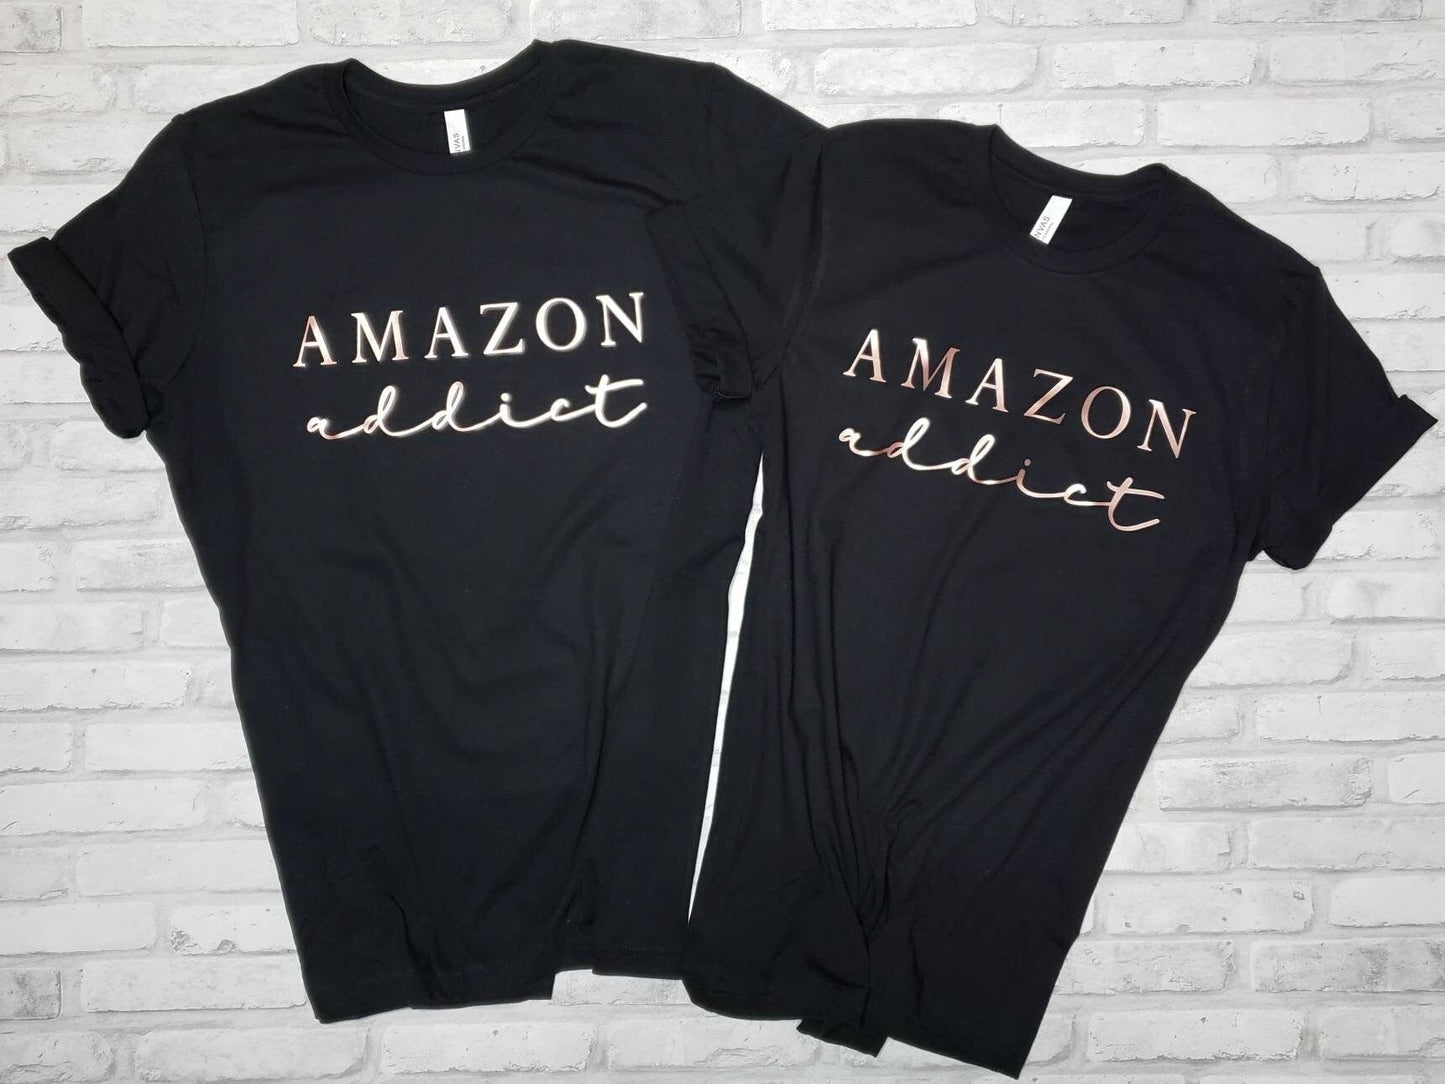 Amazon Addict Black Bella T-shirt with Rose Gold Metallic Print Cotton Comfy T-Shirt Shelton Shirts